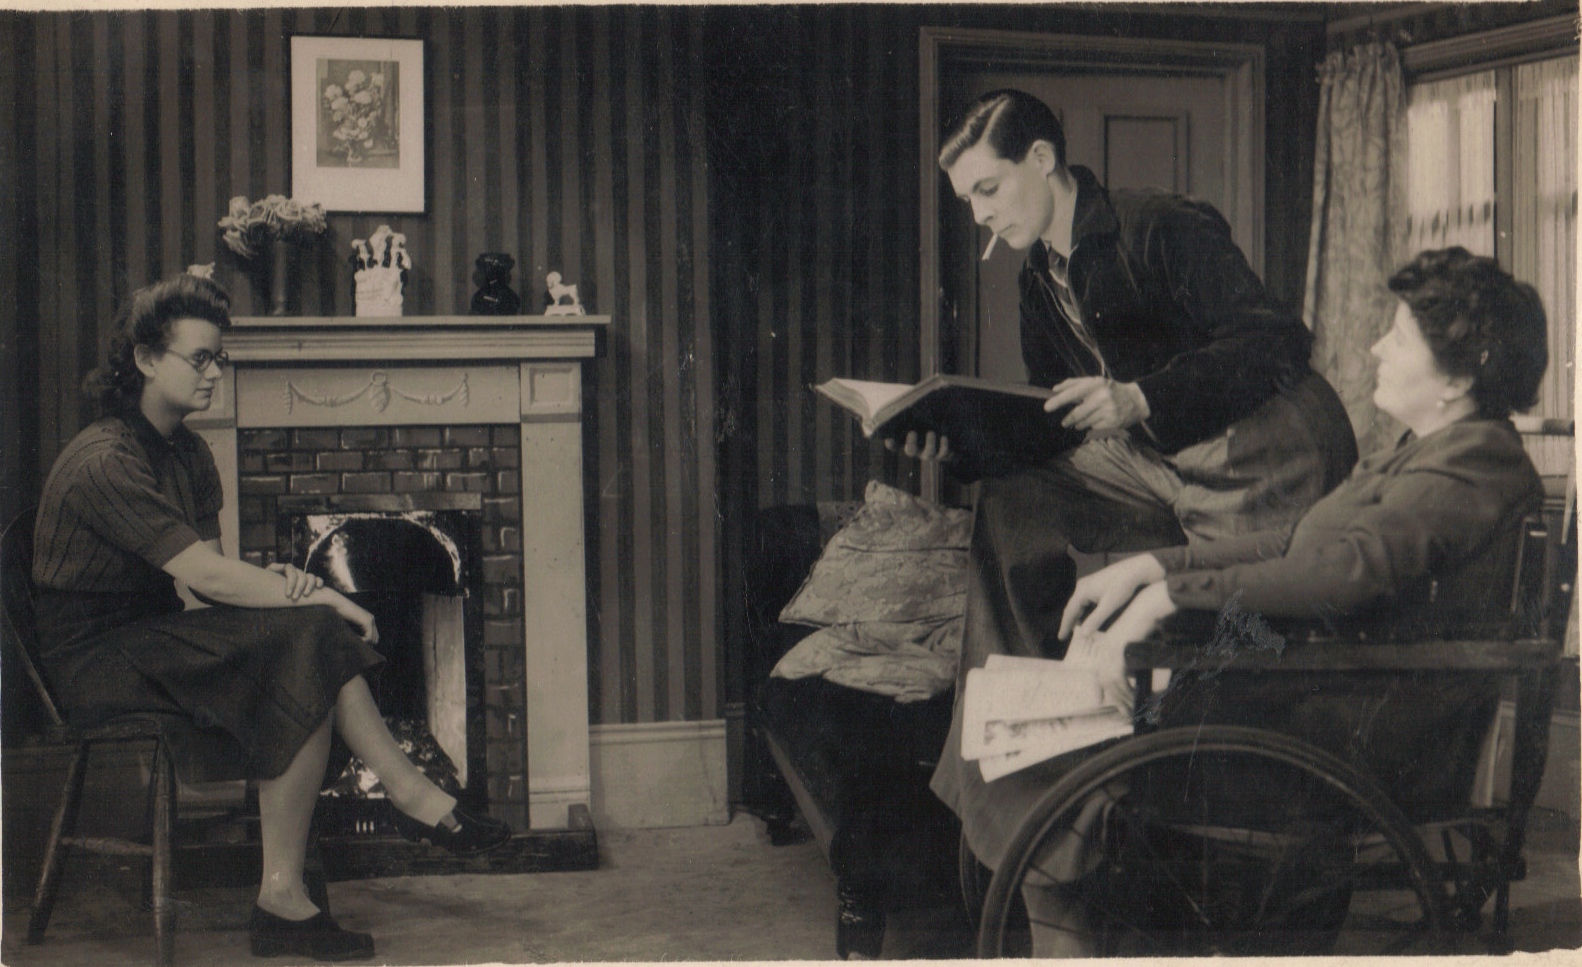 'Punch Bowl' - Pocklington Theatre Company - April 1945